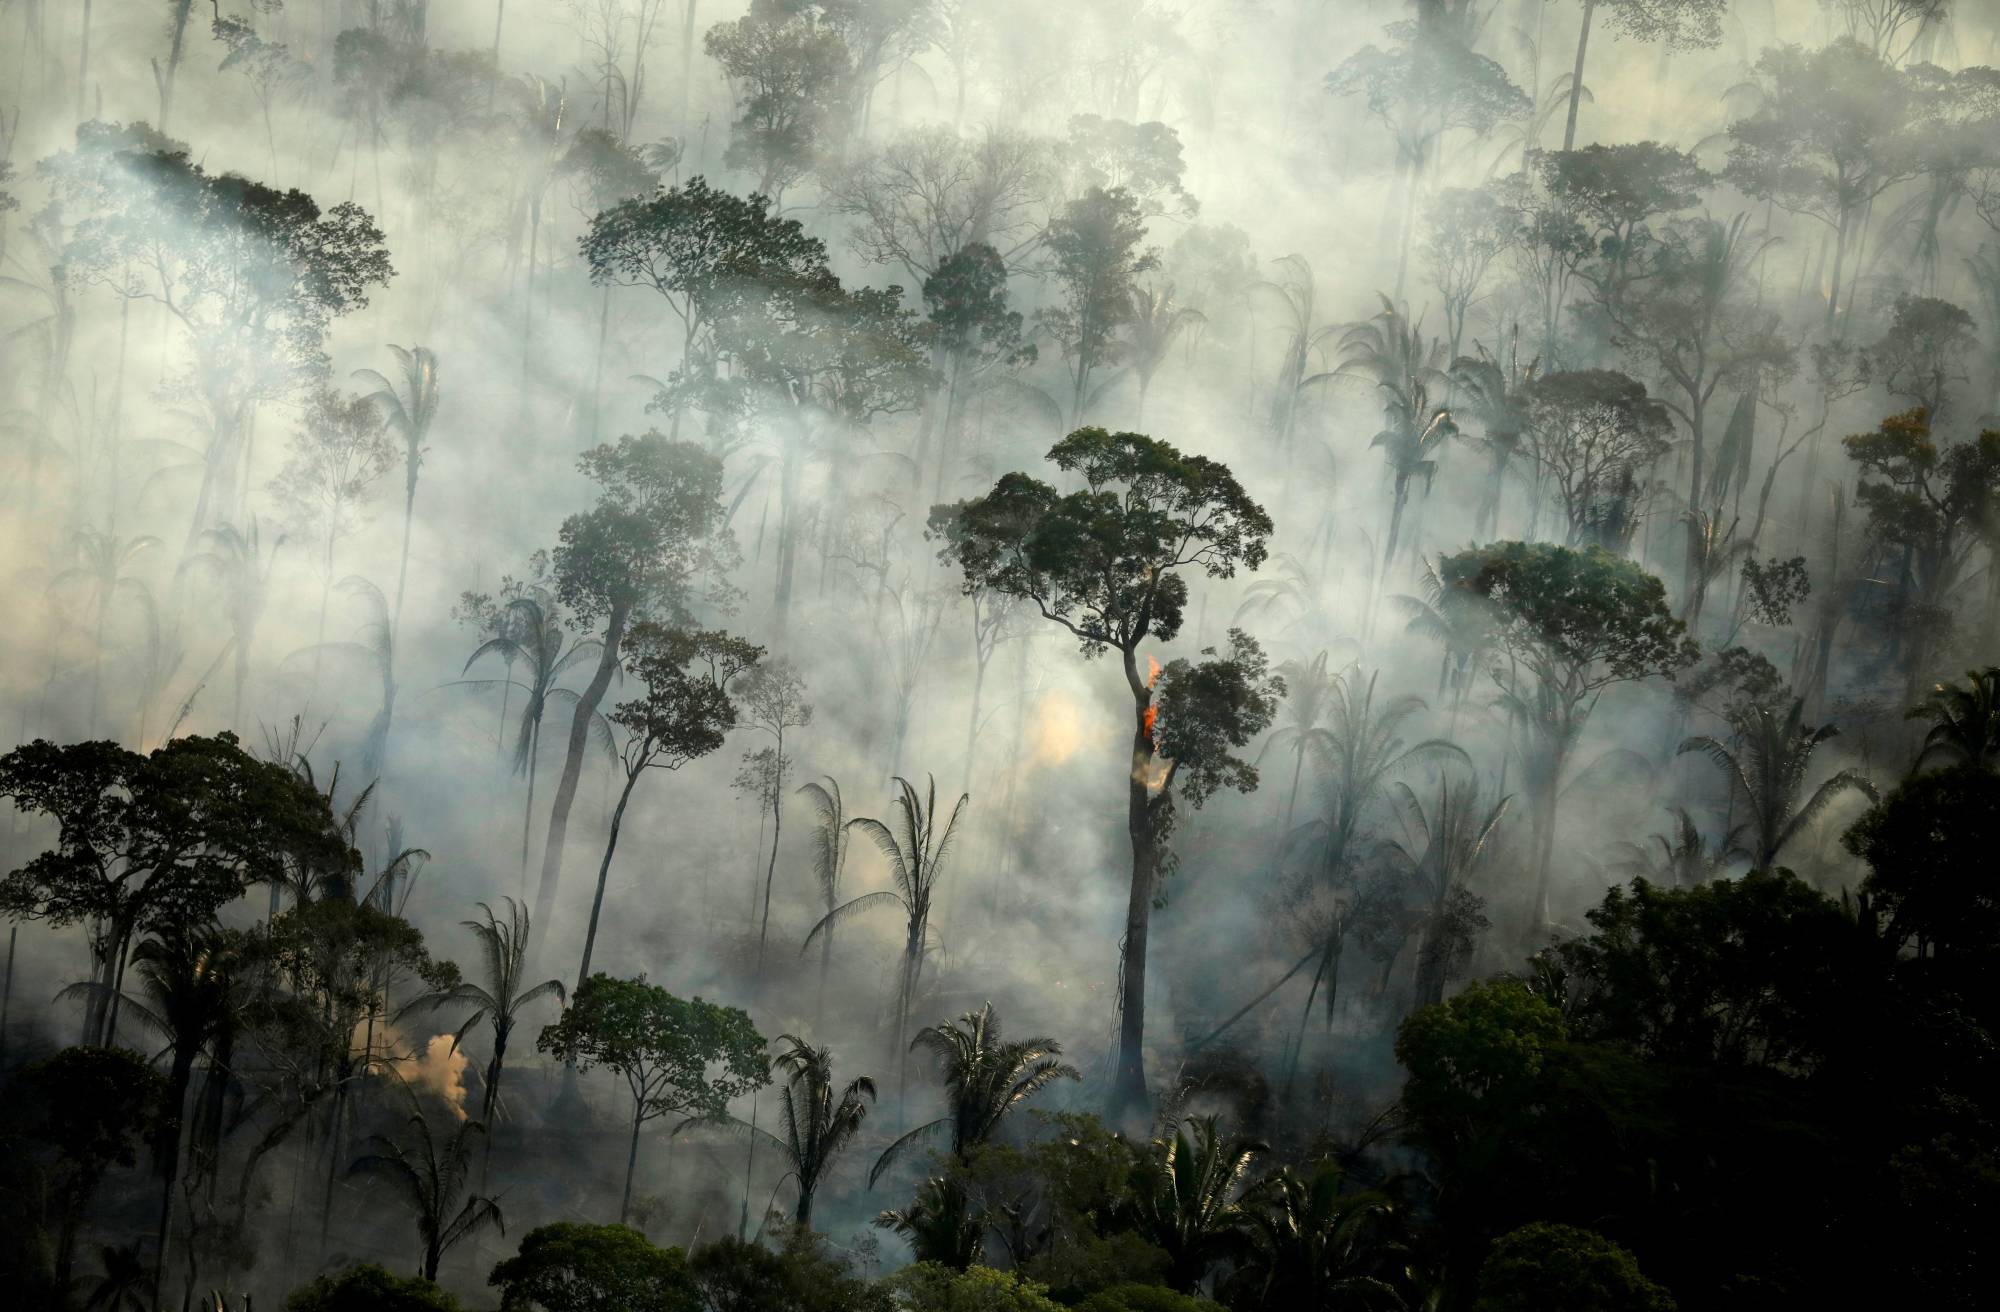 Future threats to the  rainforest